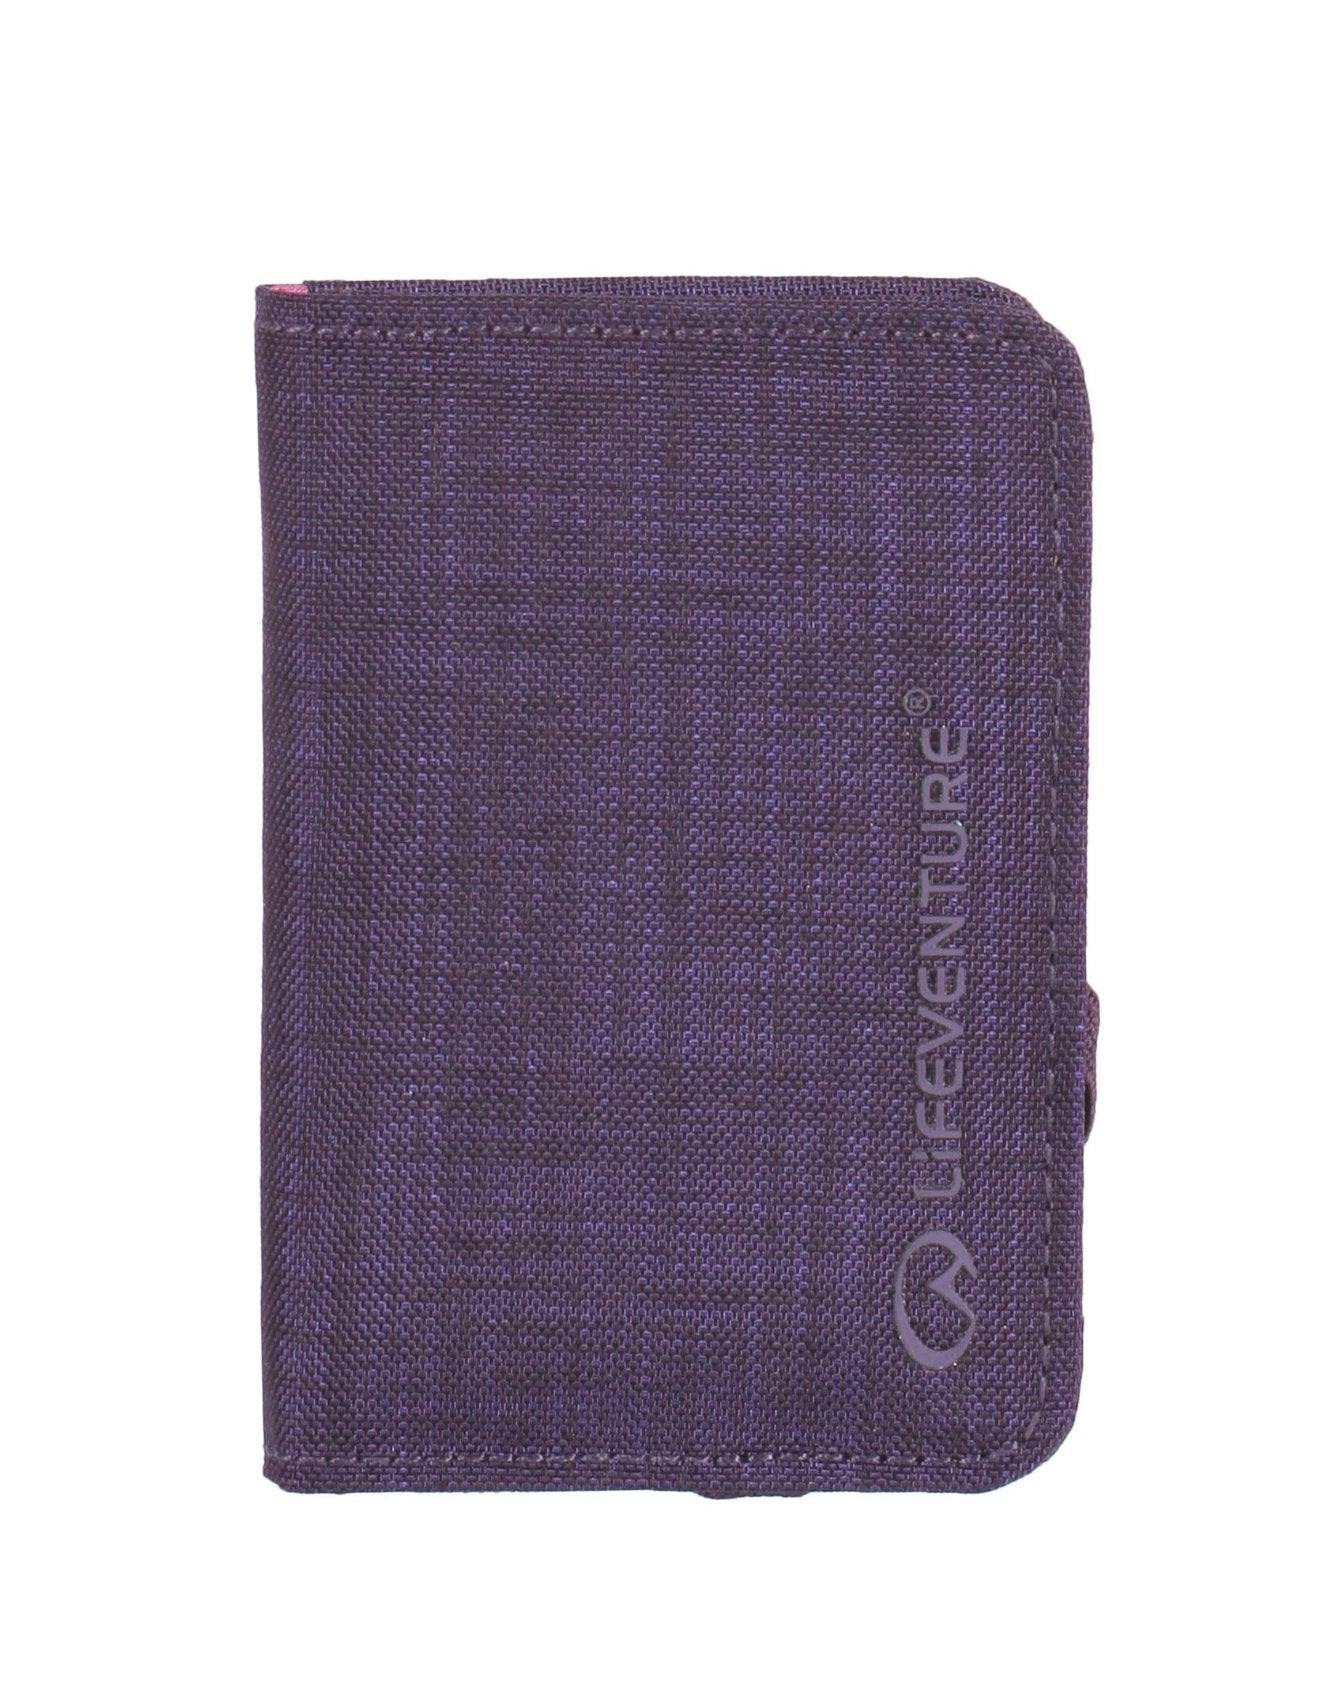 Lifeventure RFID Card Wallet | Travel Wallets | NZ #purple